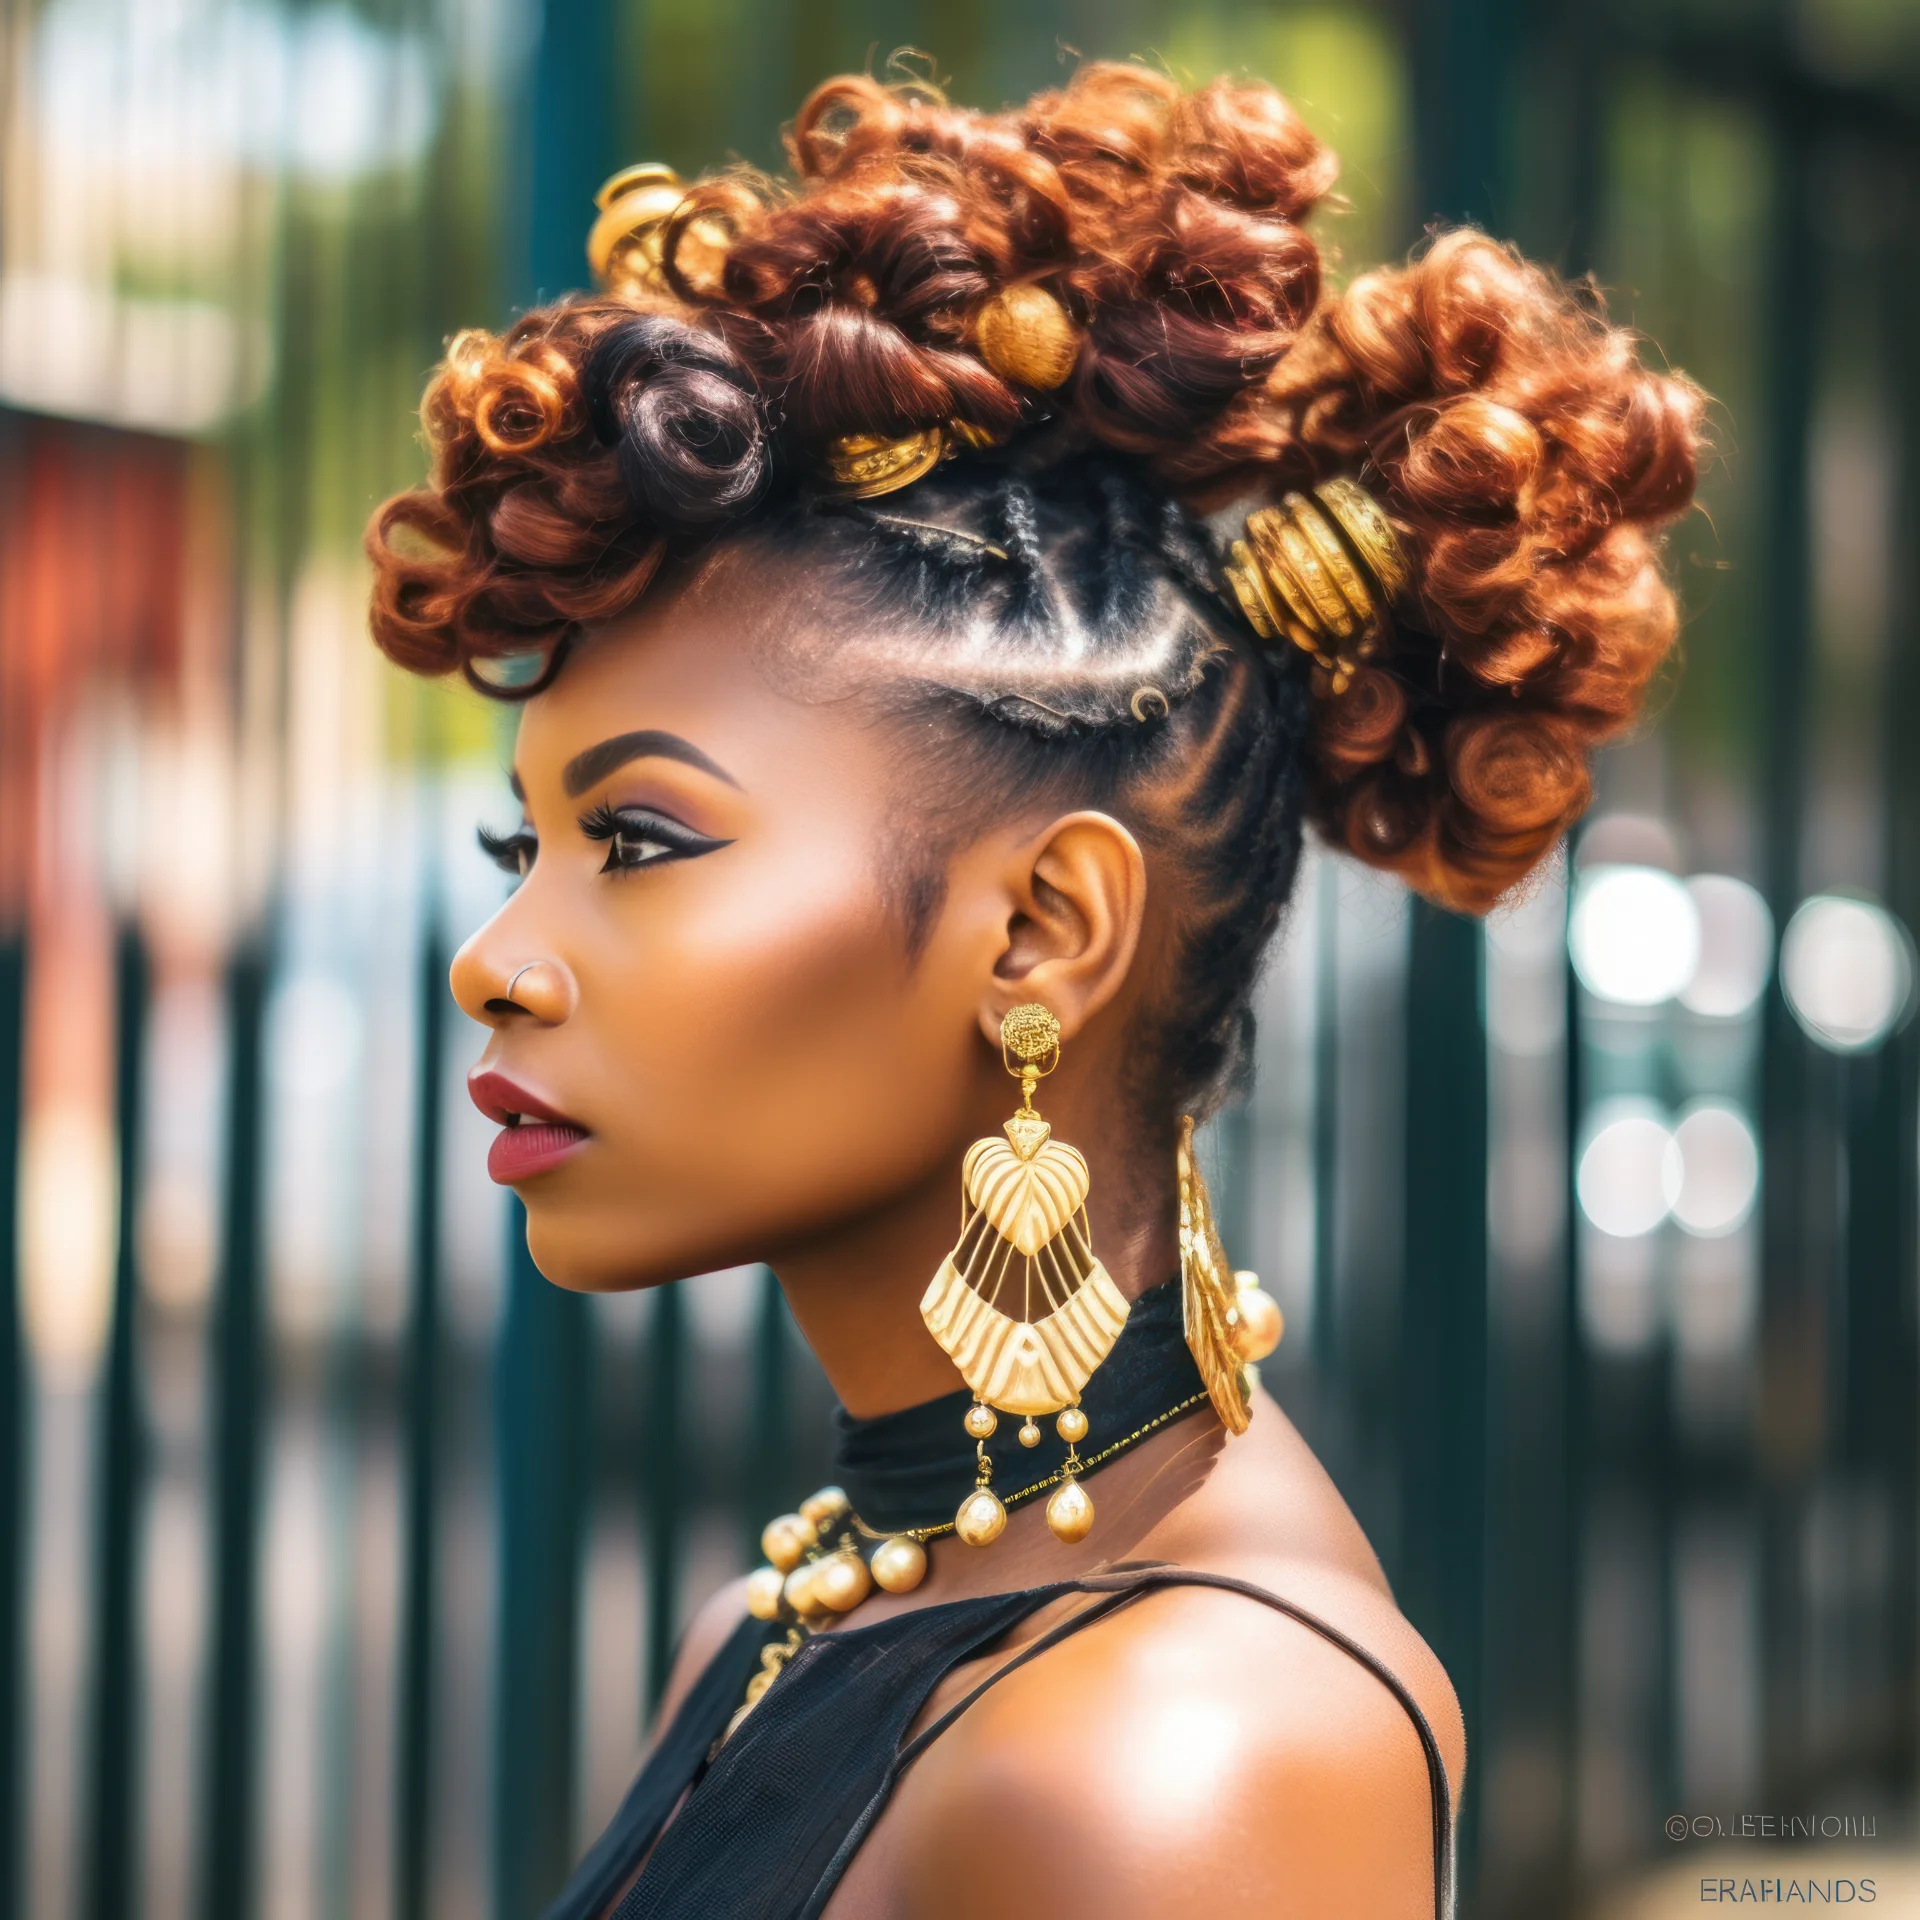 Bantu Knots Hairstyles For Women -3